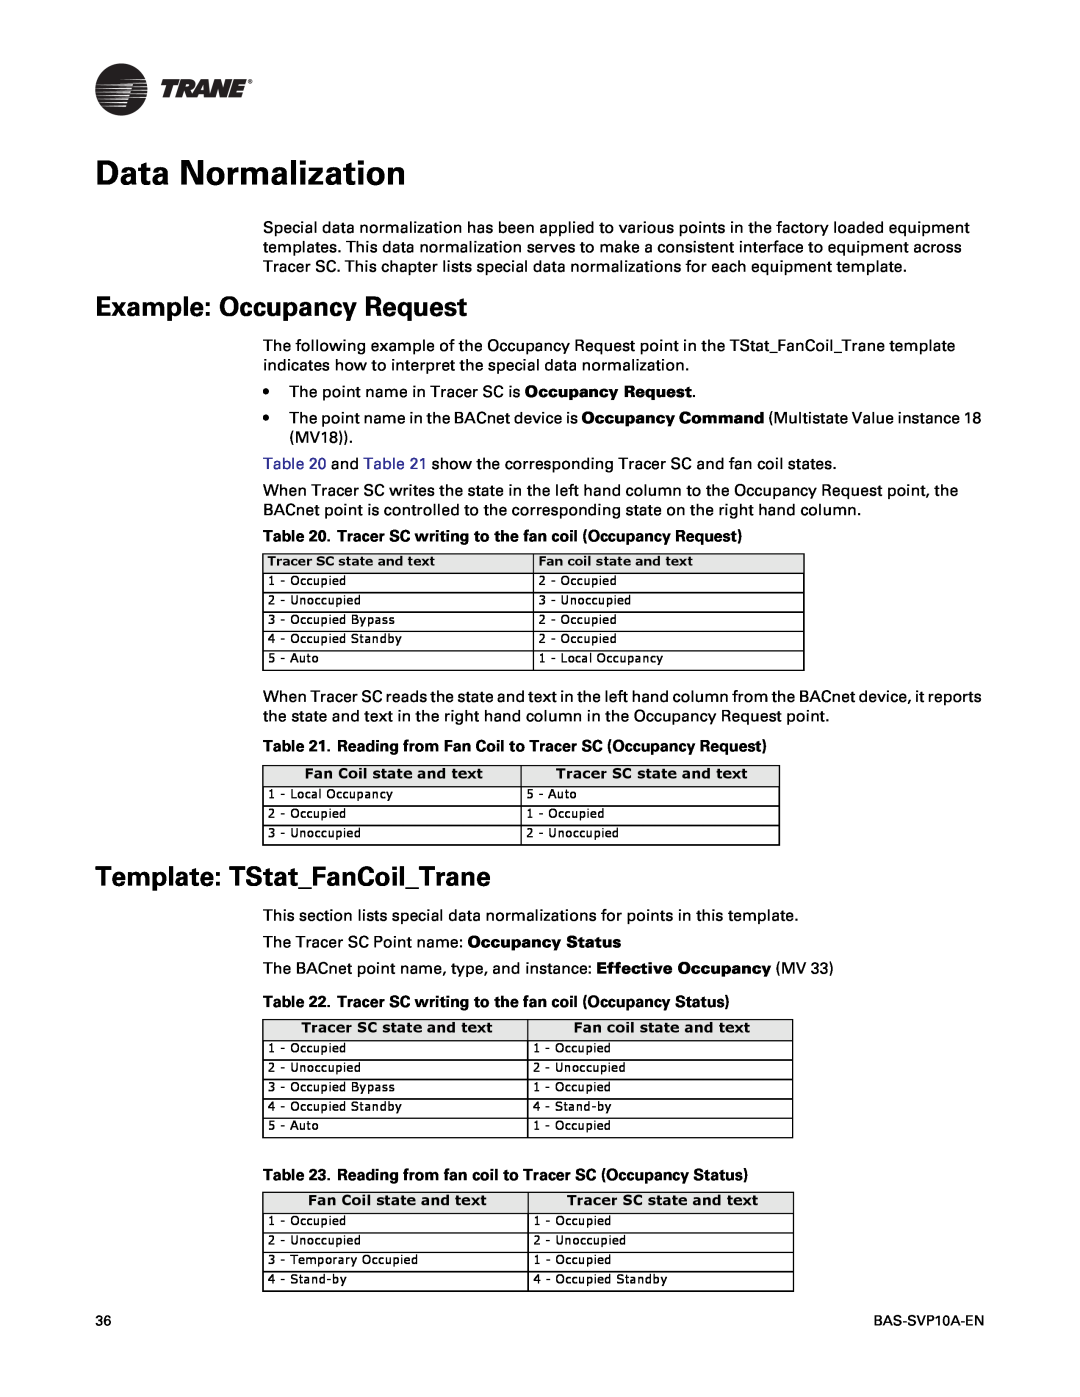 Trane BAS-SVP10A-EN manual Data Normalization, Example Occupancy Request, Template TStatFanCoilTrane 